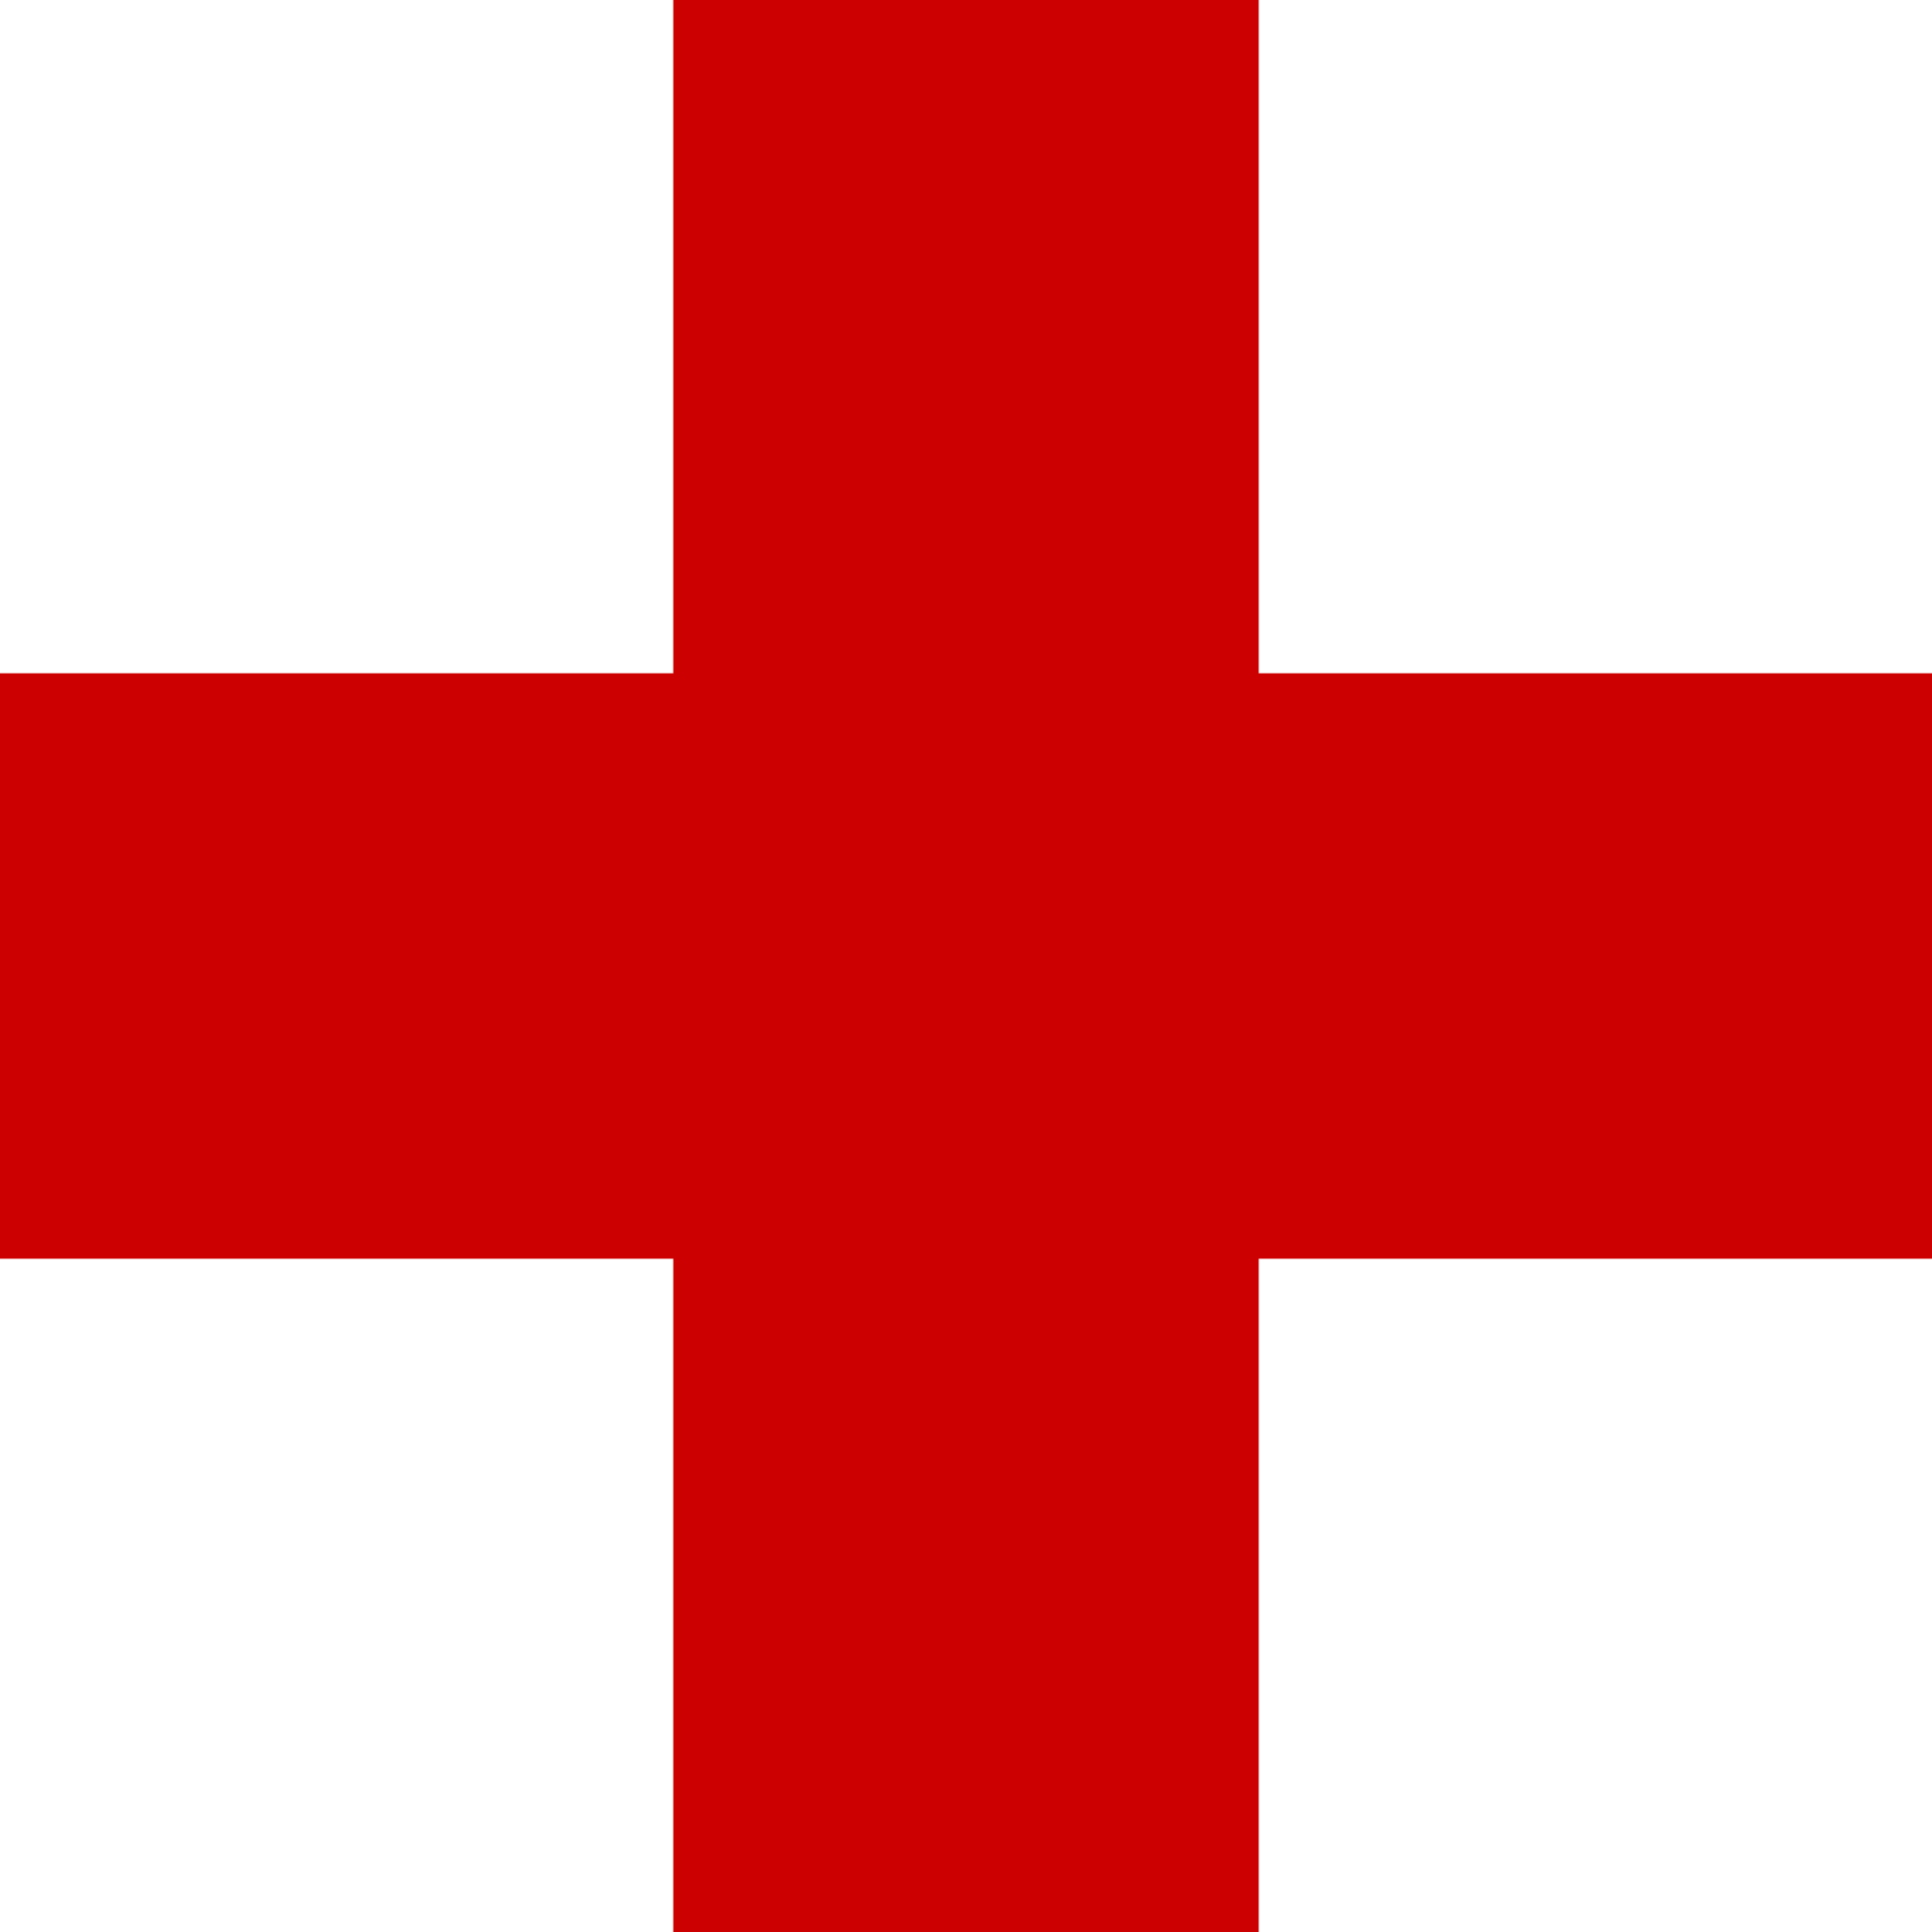 Red-Cross